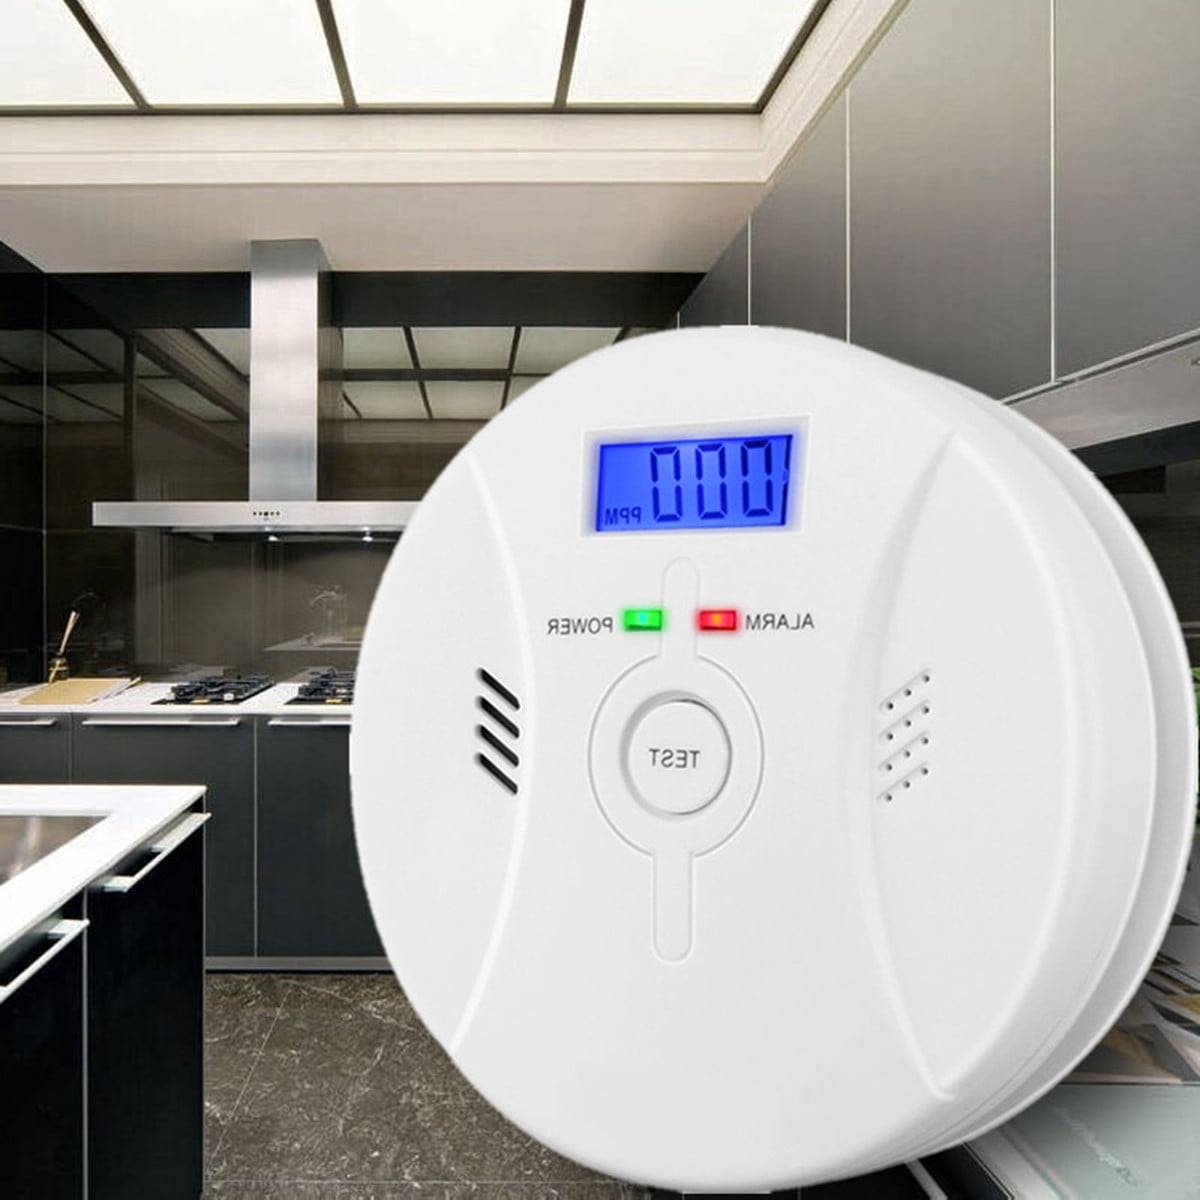 Co carbon monoxide detector poisoning smoke gas sensor for home security warn Fy 